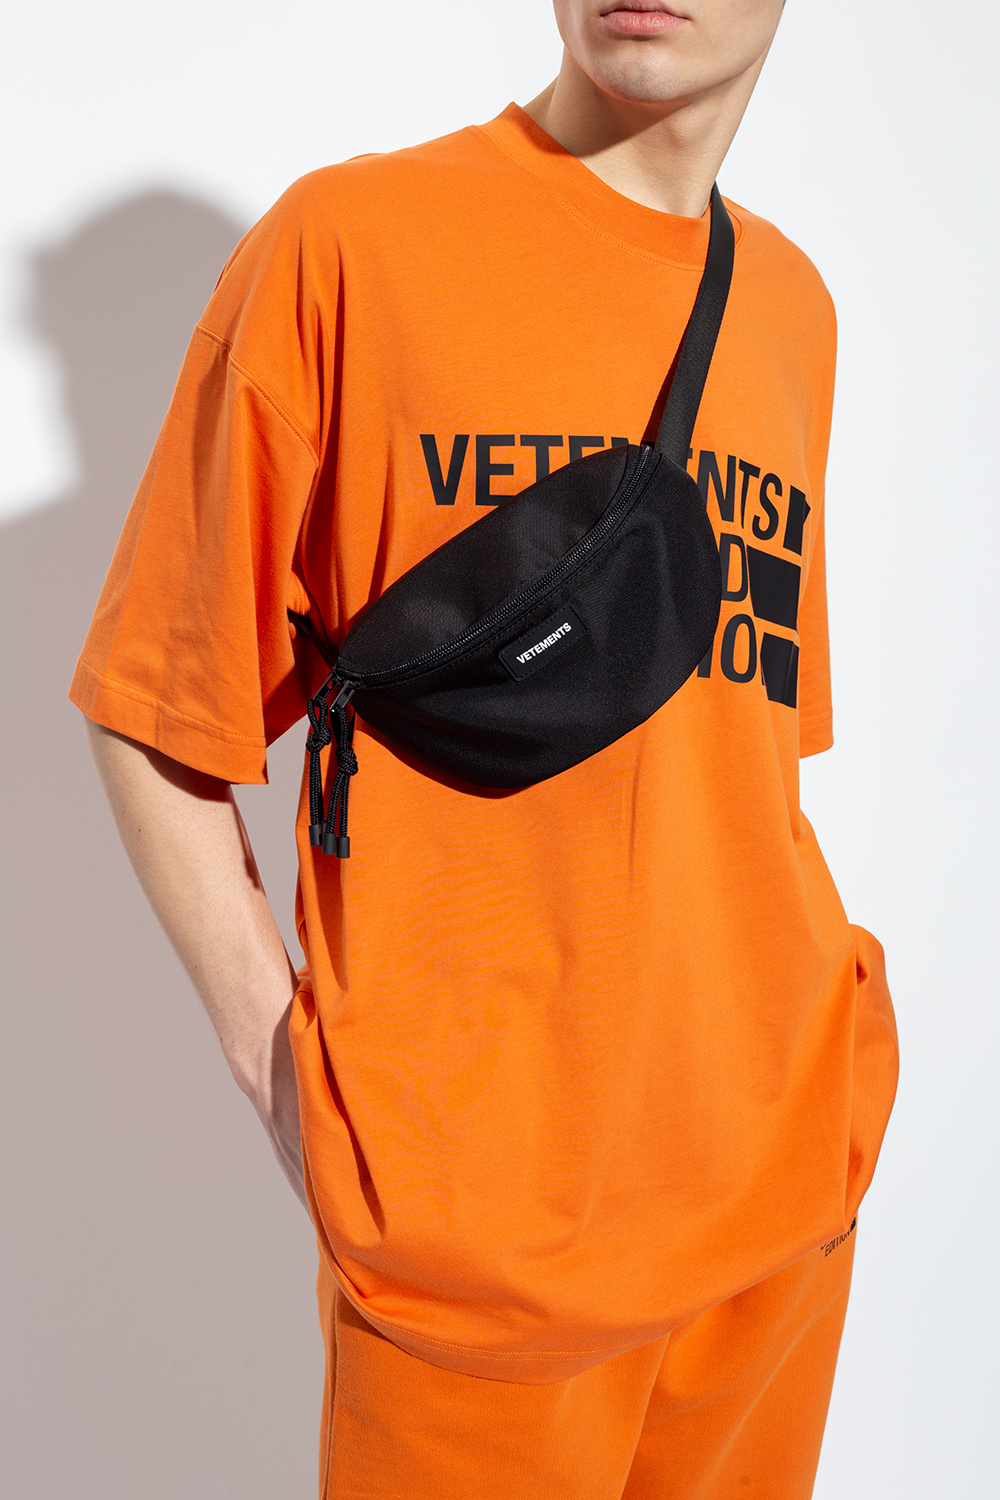 VETEMENTS this mens cotton waist bounds bag has large zippers for a retro effect